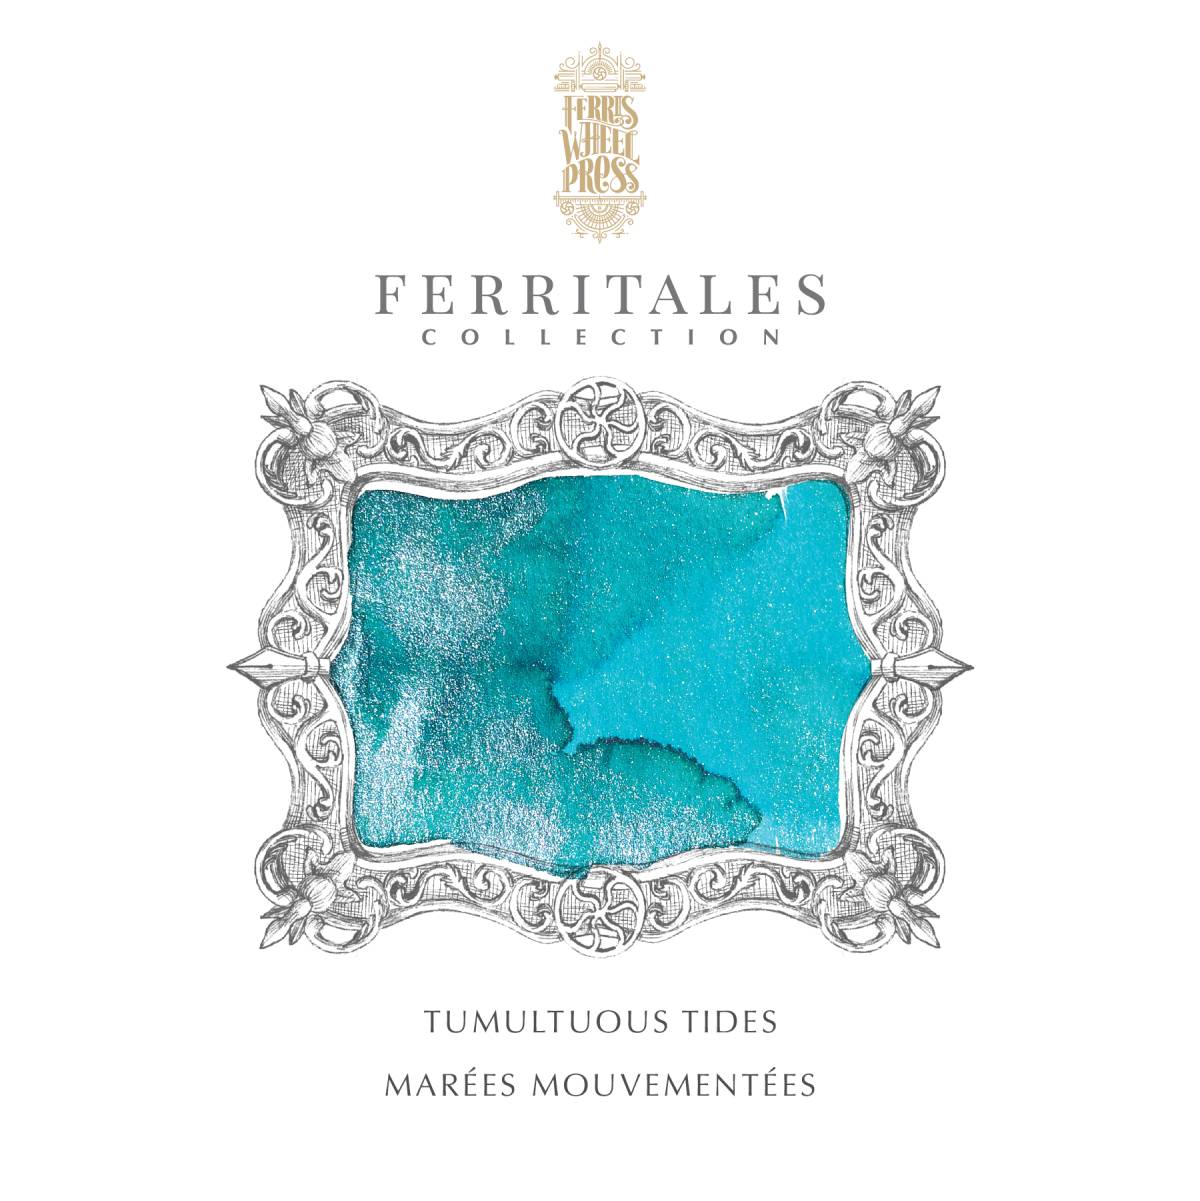 Ferris Wheel Press - Ferritales Ink - Tumultuous Tides, 20 ml